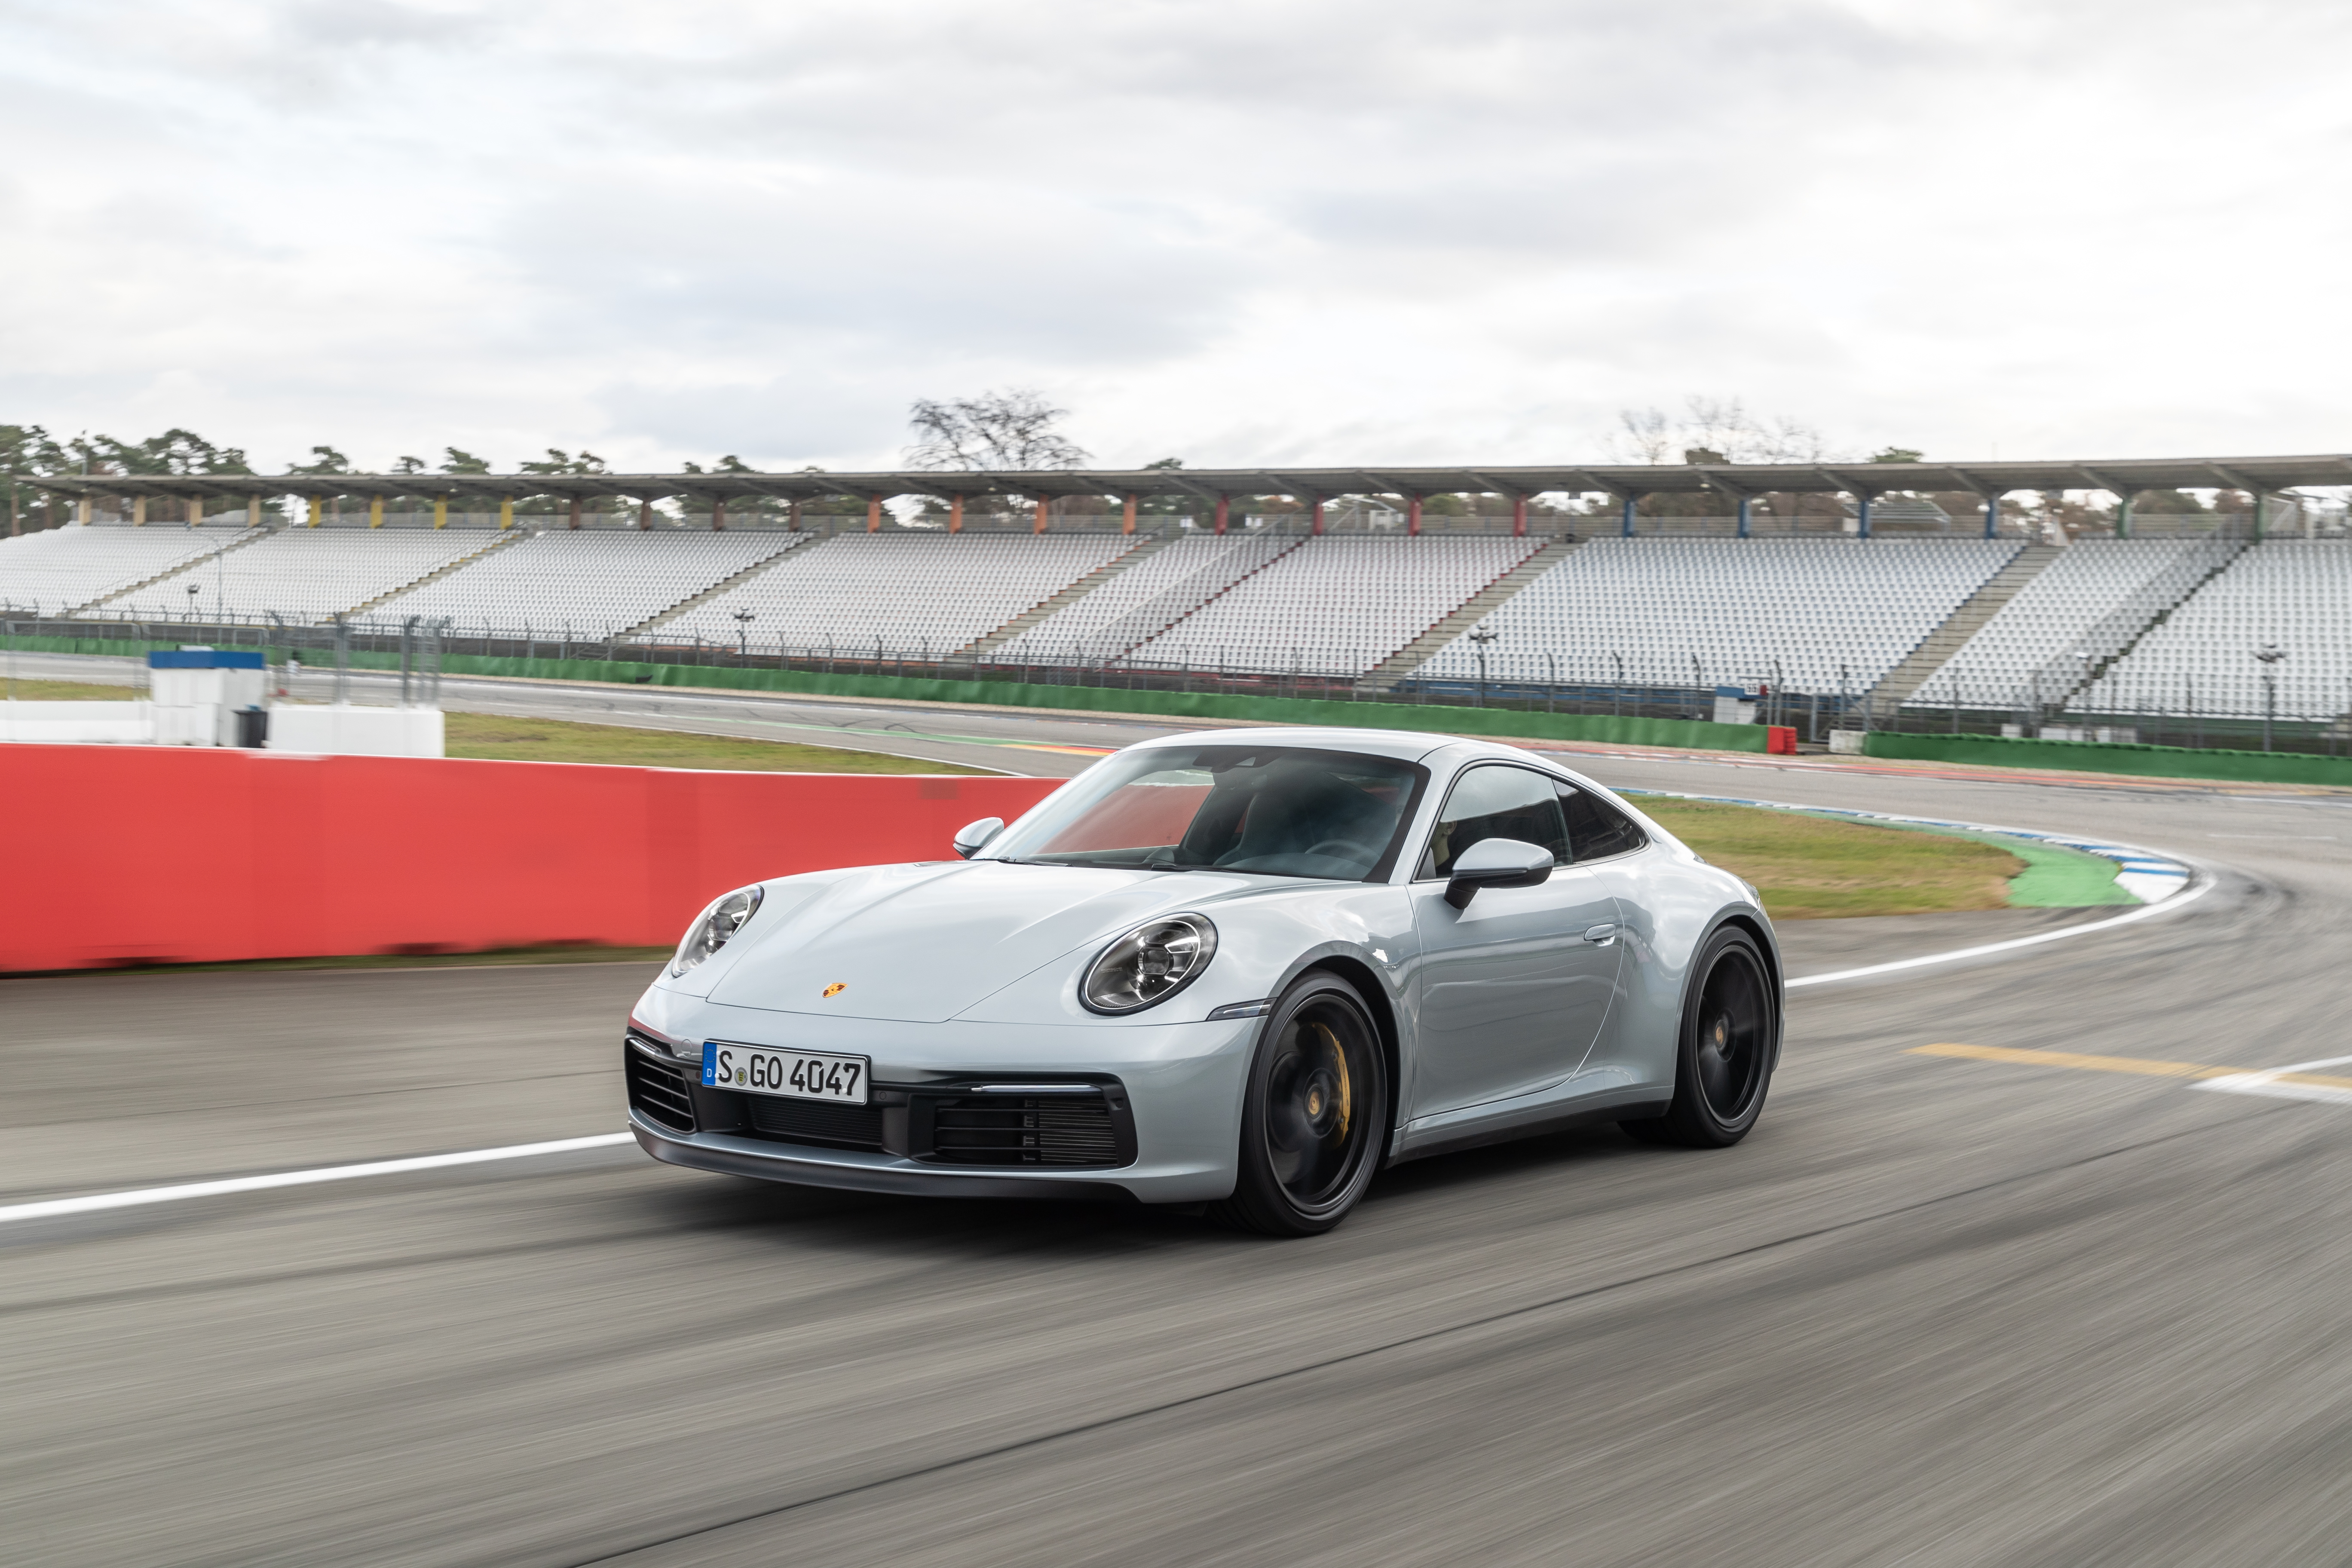 Porsche 911 Carrera mod specifications